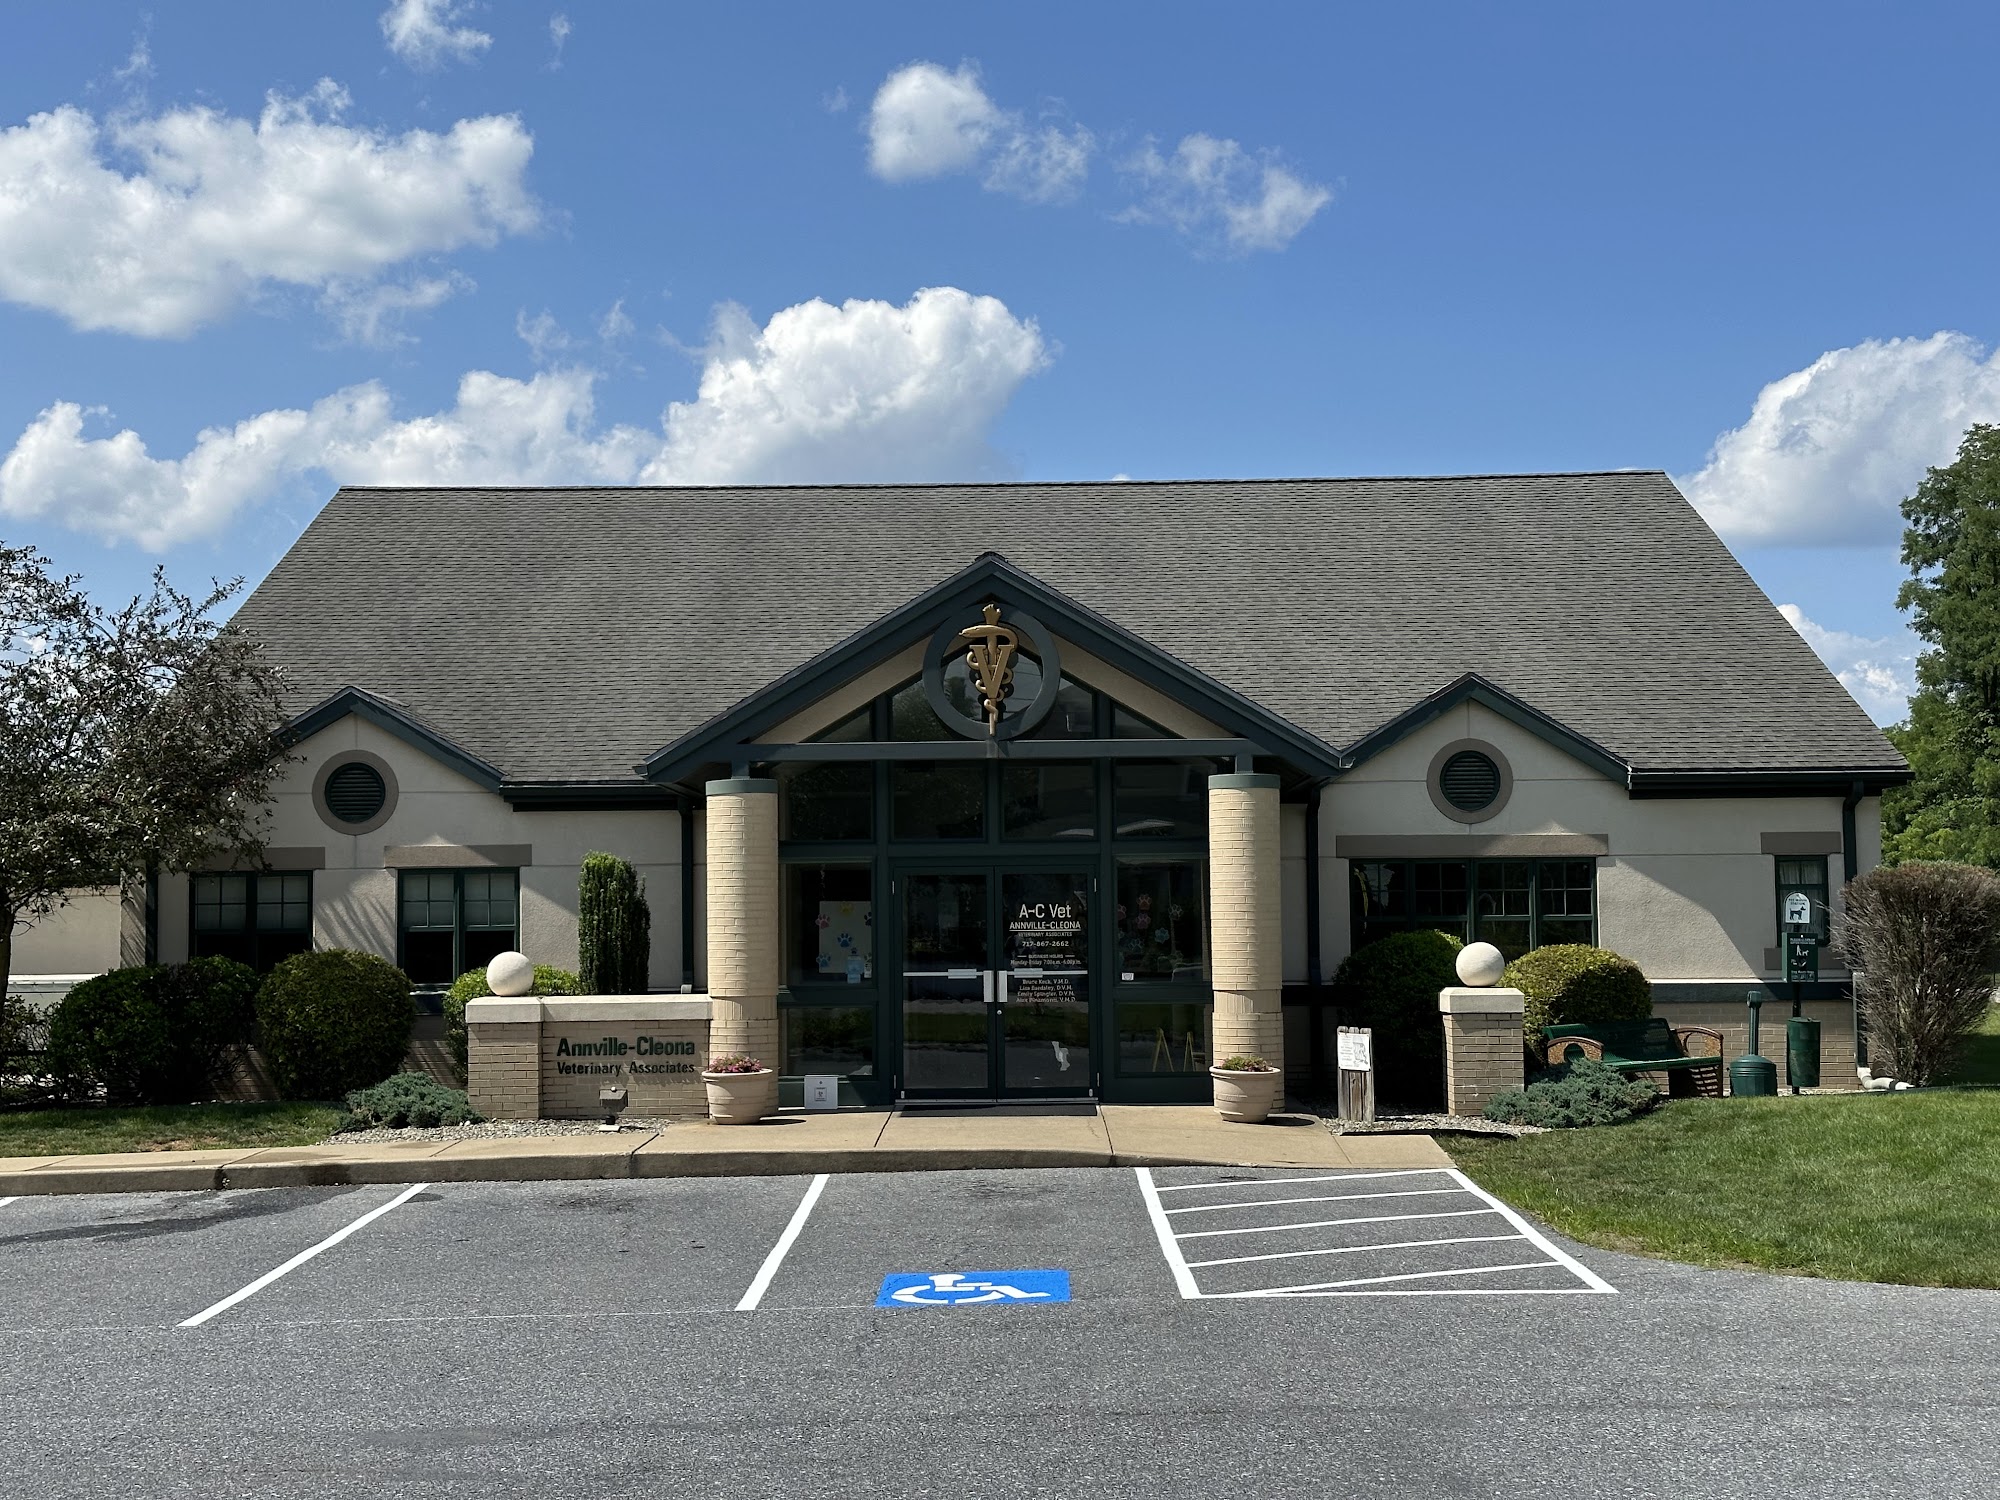 Annville-Cleona Veterinary Associates, Inc. 1259 E Main St, Annville Pennsylvania 17003